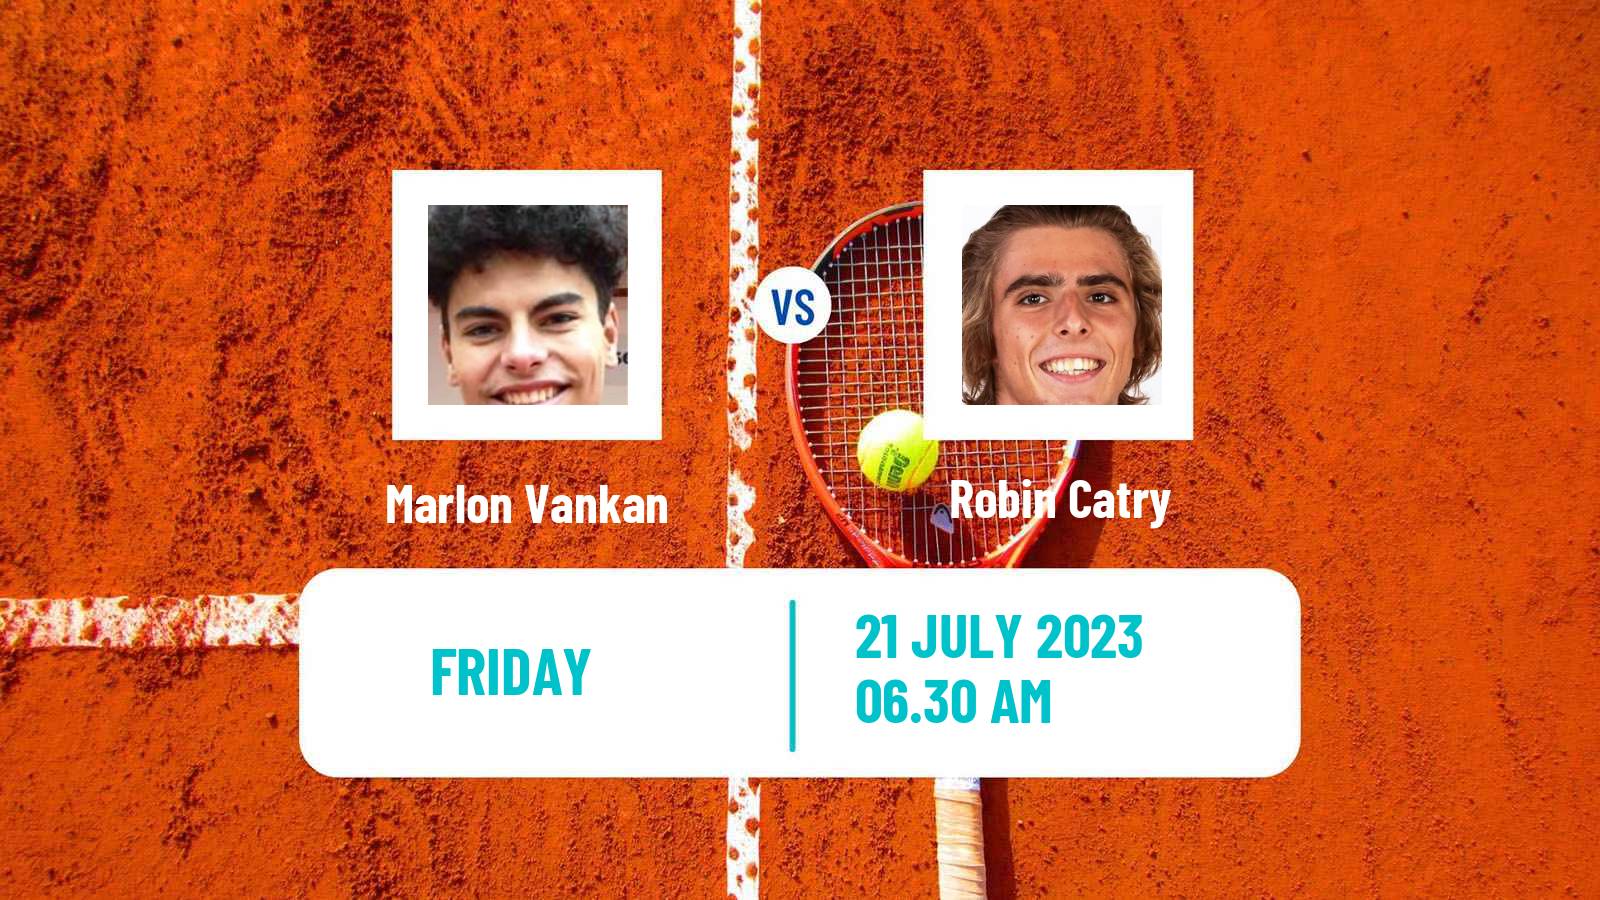 Tennis ITF M25 Esch Alzette 2 Men Marlon Vankan - Robin Catry